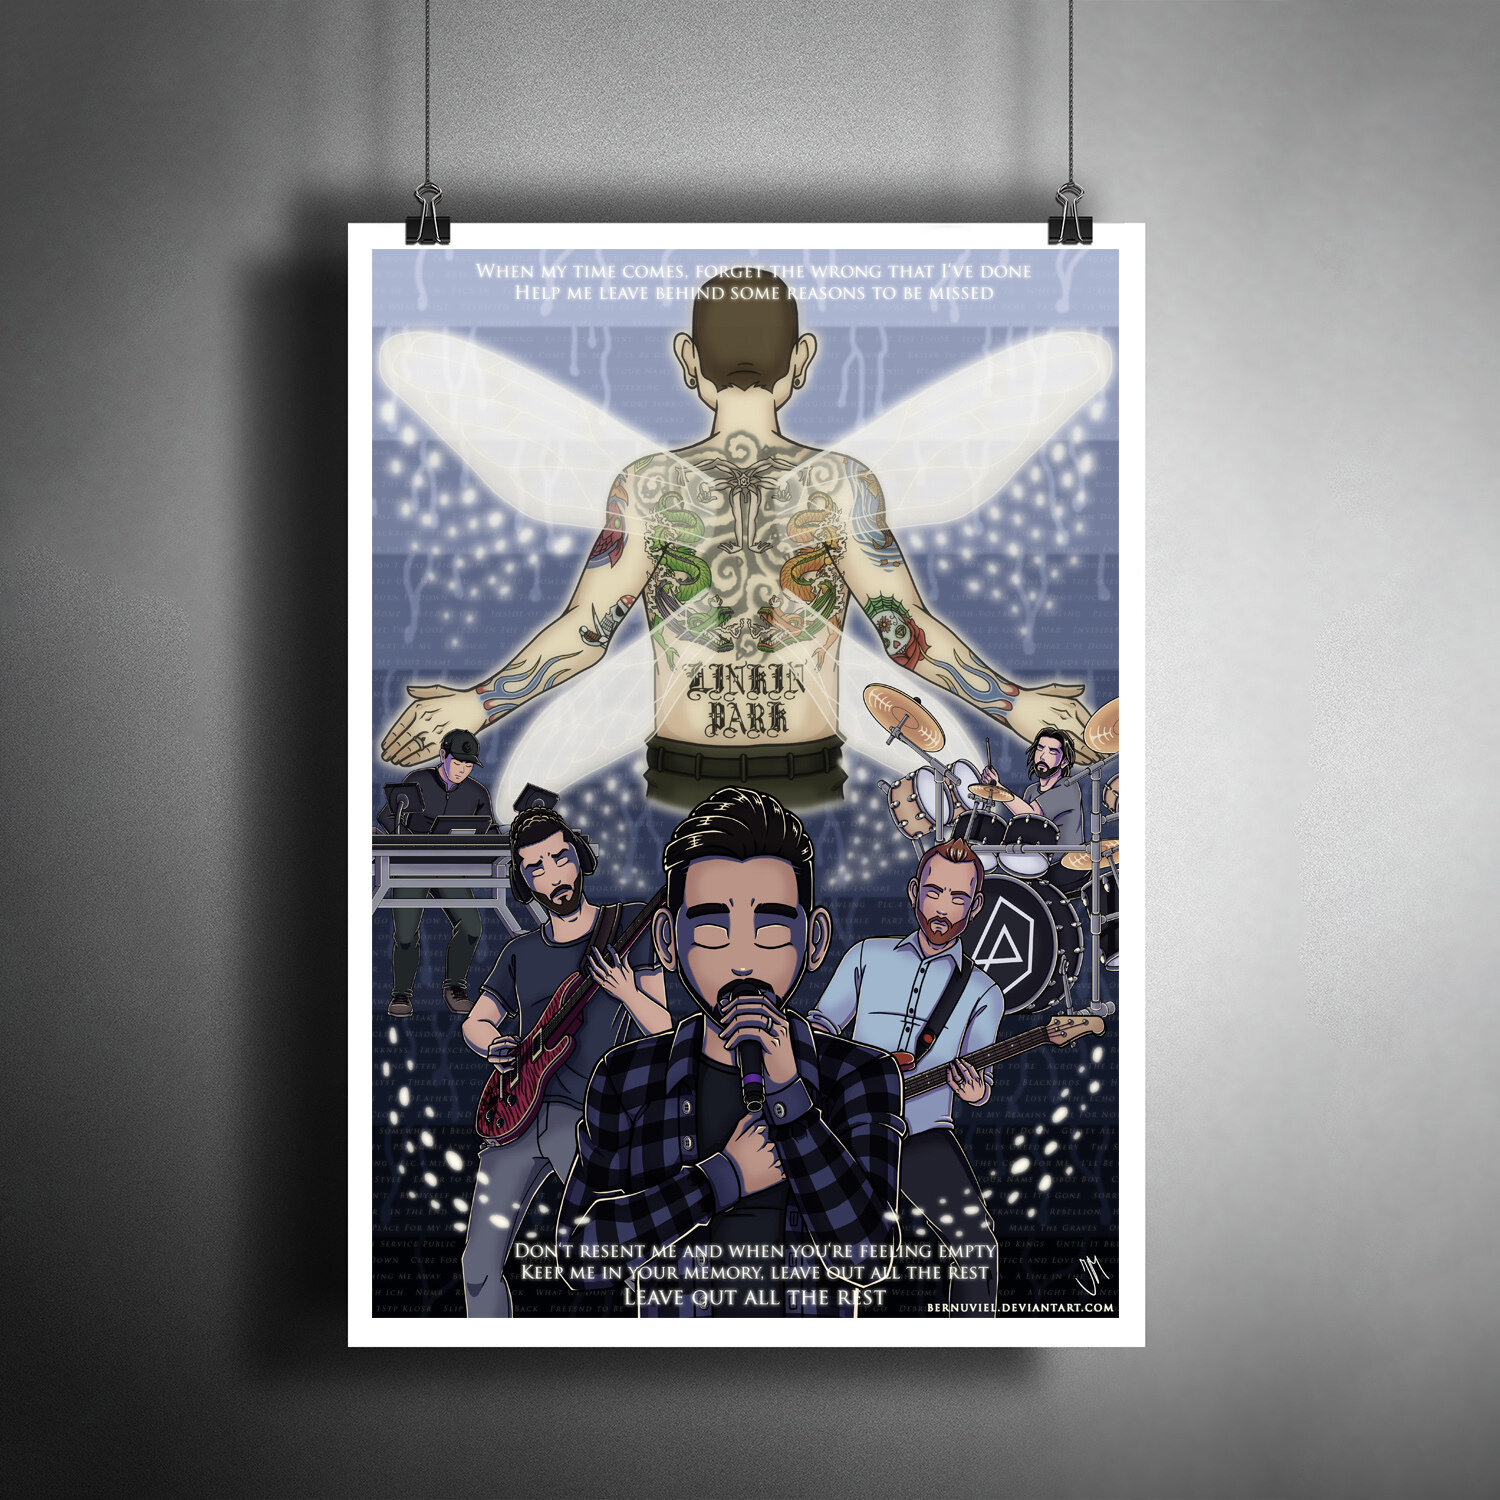 Постер плакат для интерьера "Музыка: Американская рок-группа Линкин Парк. Честер Беннингтон, группа Linkin Park"/ A3 (297 x 420 мм)